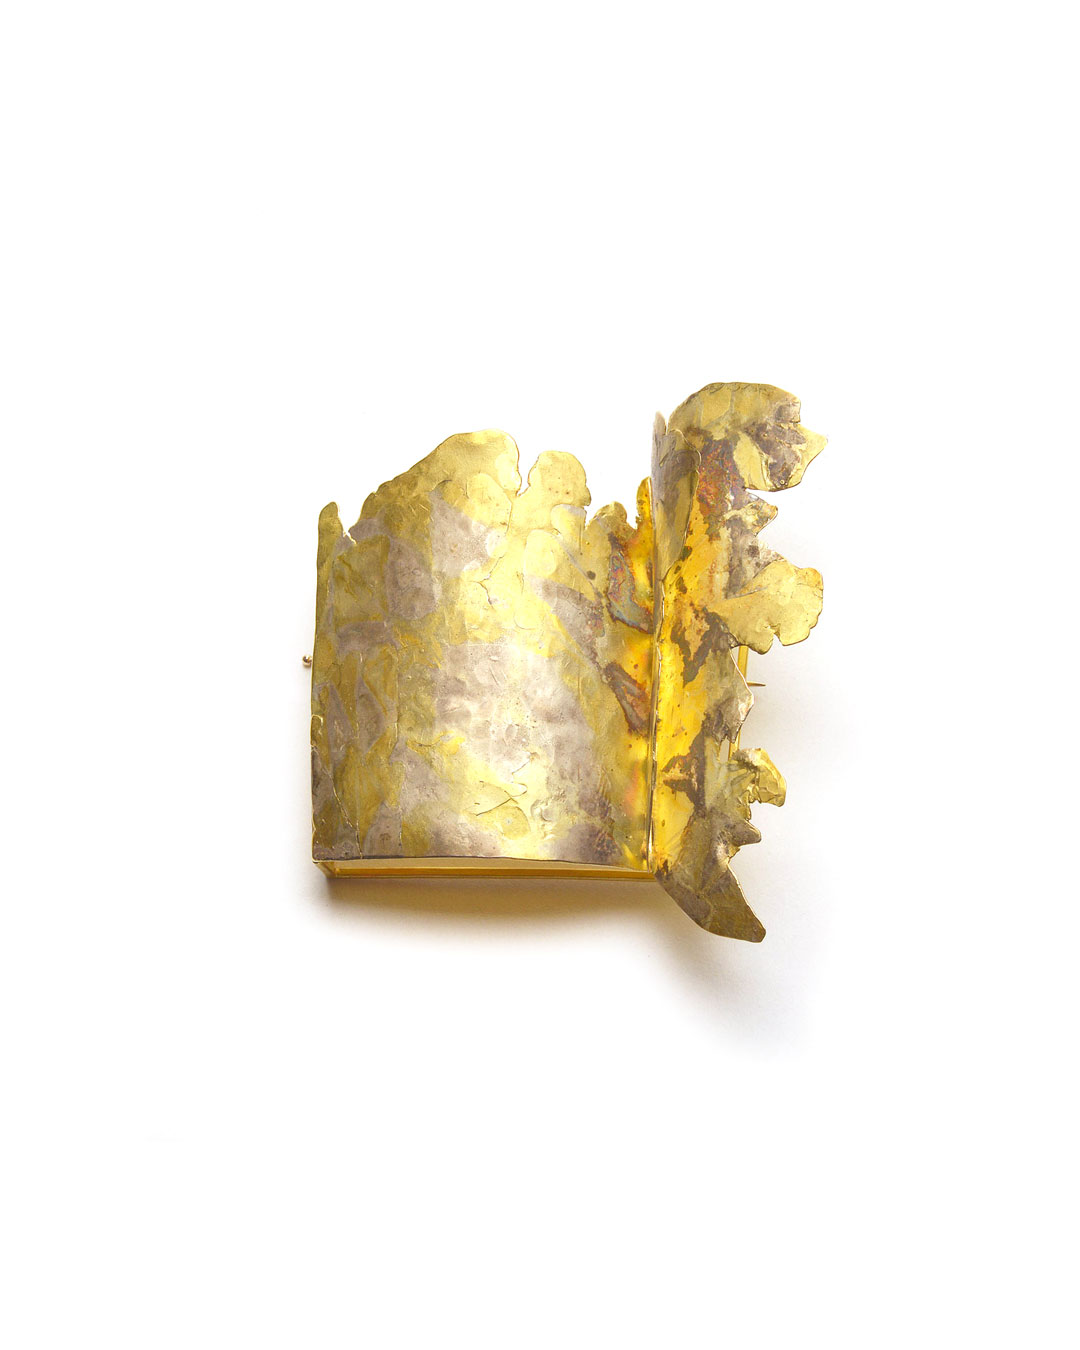 Stefano Marchetti, zonder titel, 2004, broche; goud, zilver, 60 x 60 x 25 mm, €8500